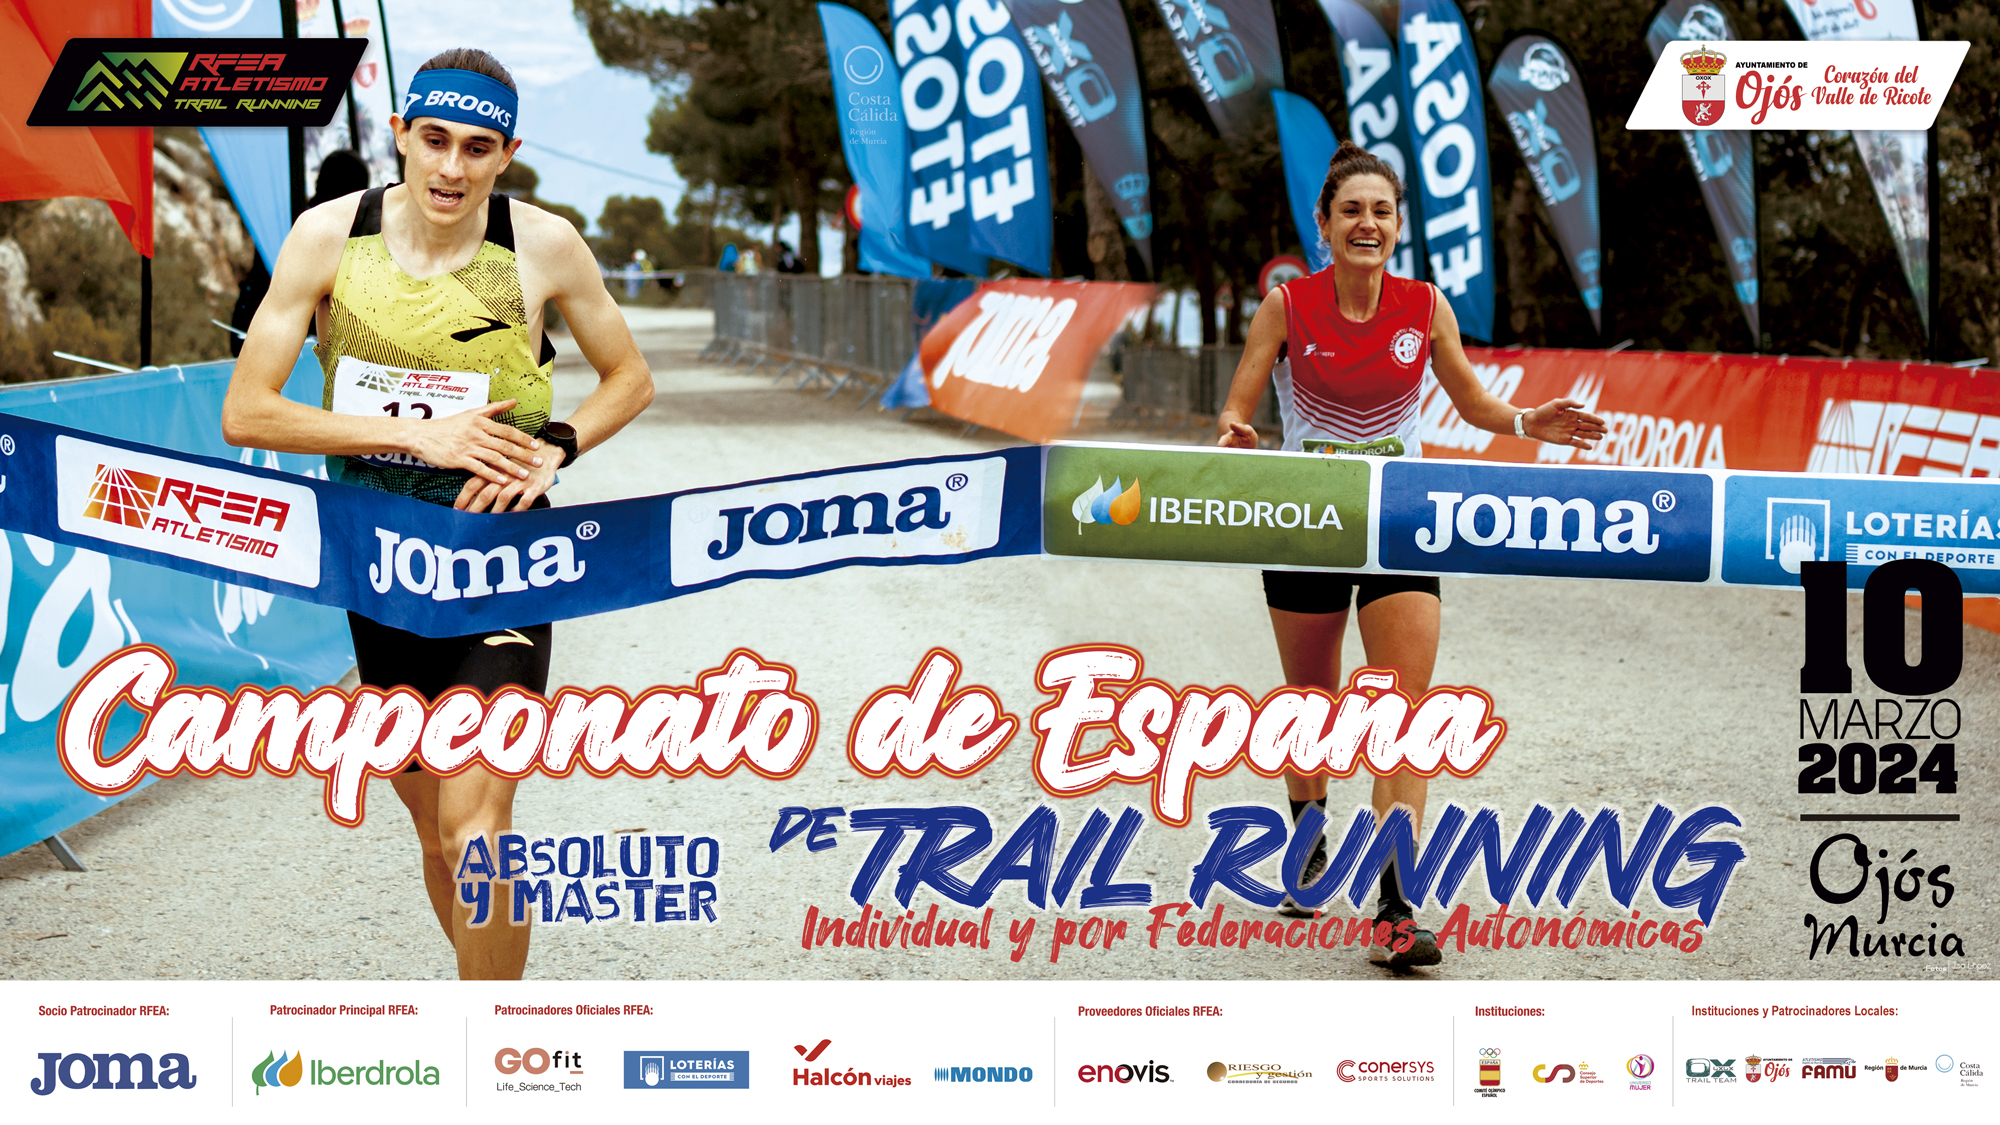 Campeonato de España de Trail Running por Federaciones Autonómicas @ Ojós, Murcia